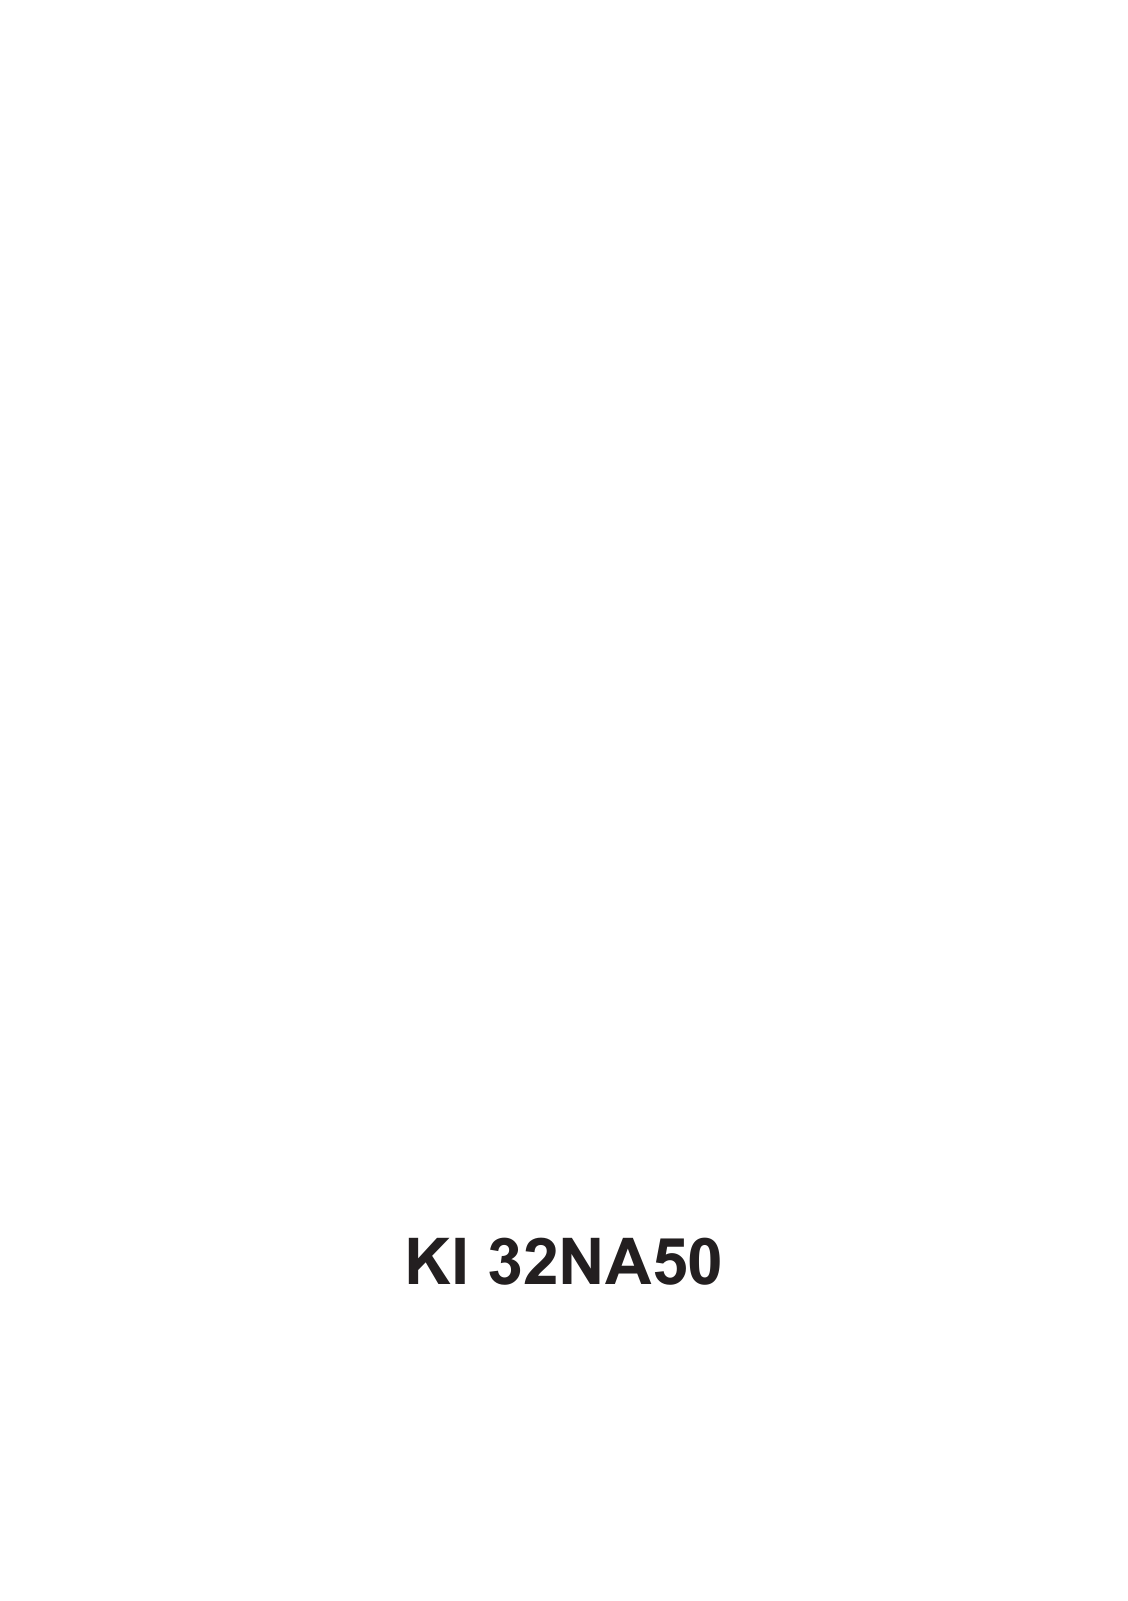 Siemens KI 32NA50 User Manual